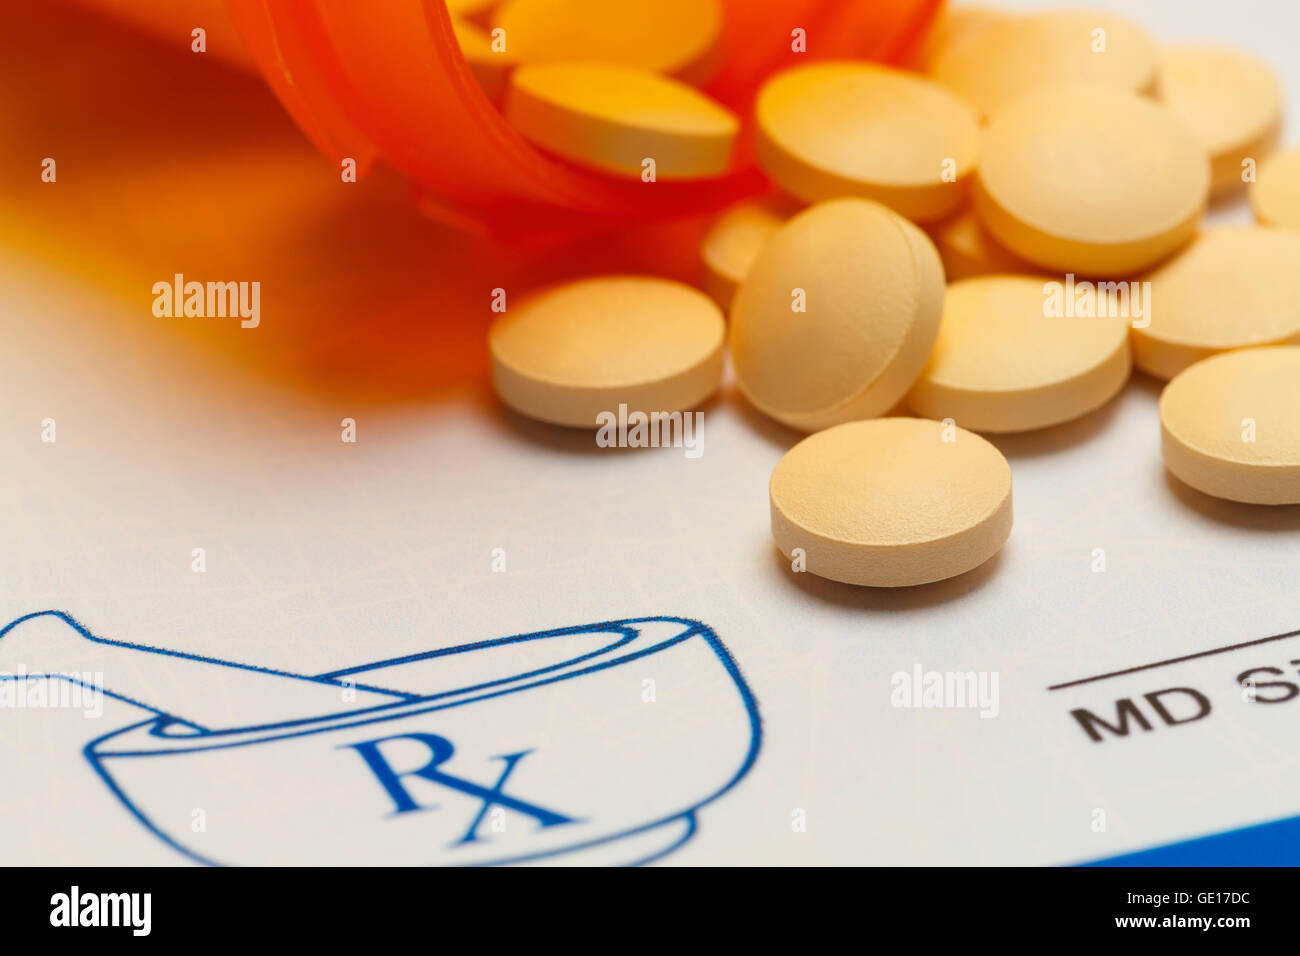 Orange Pills Spilled on RX Medicine Prescription Doctors Note. Stock Photo